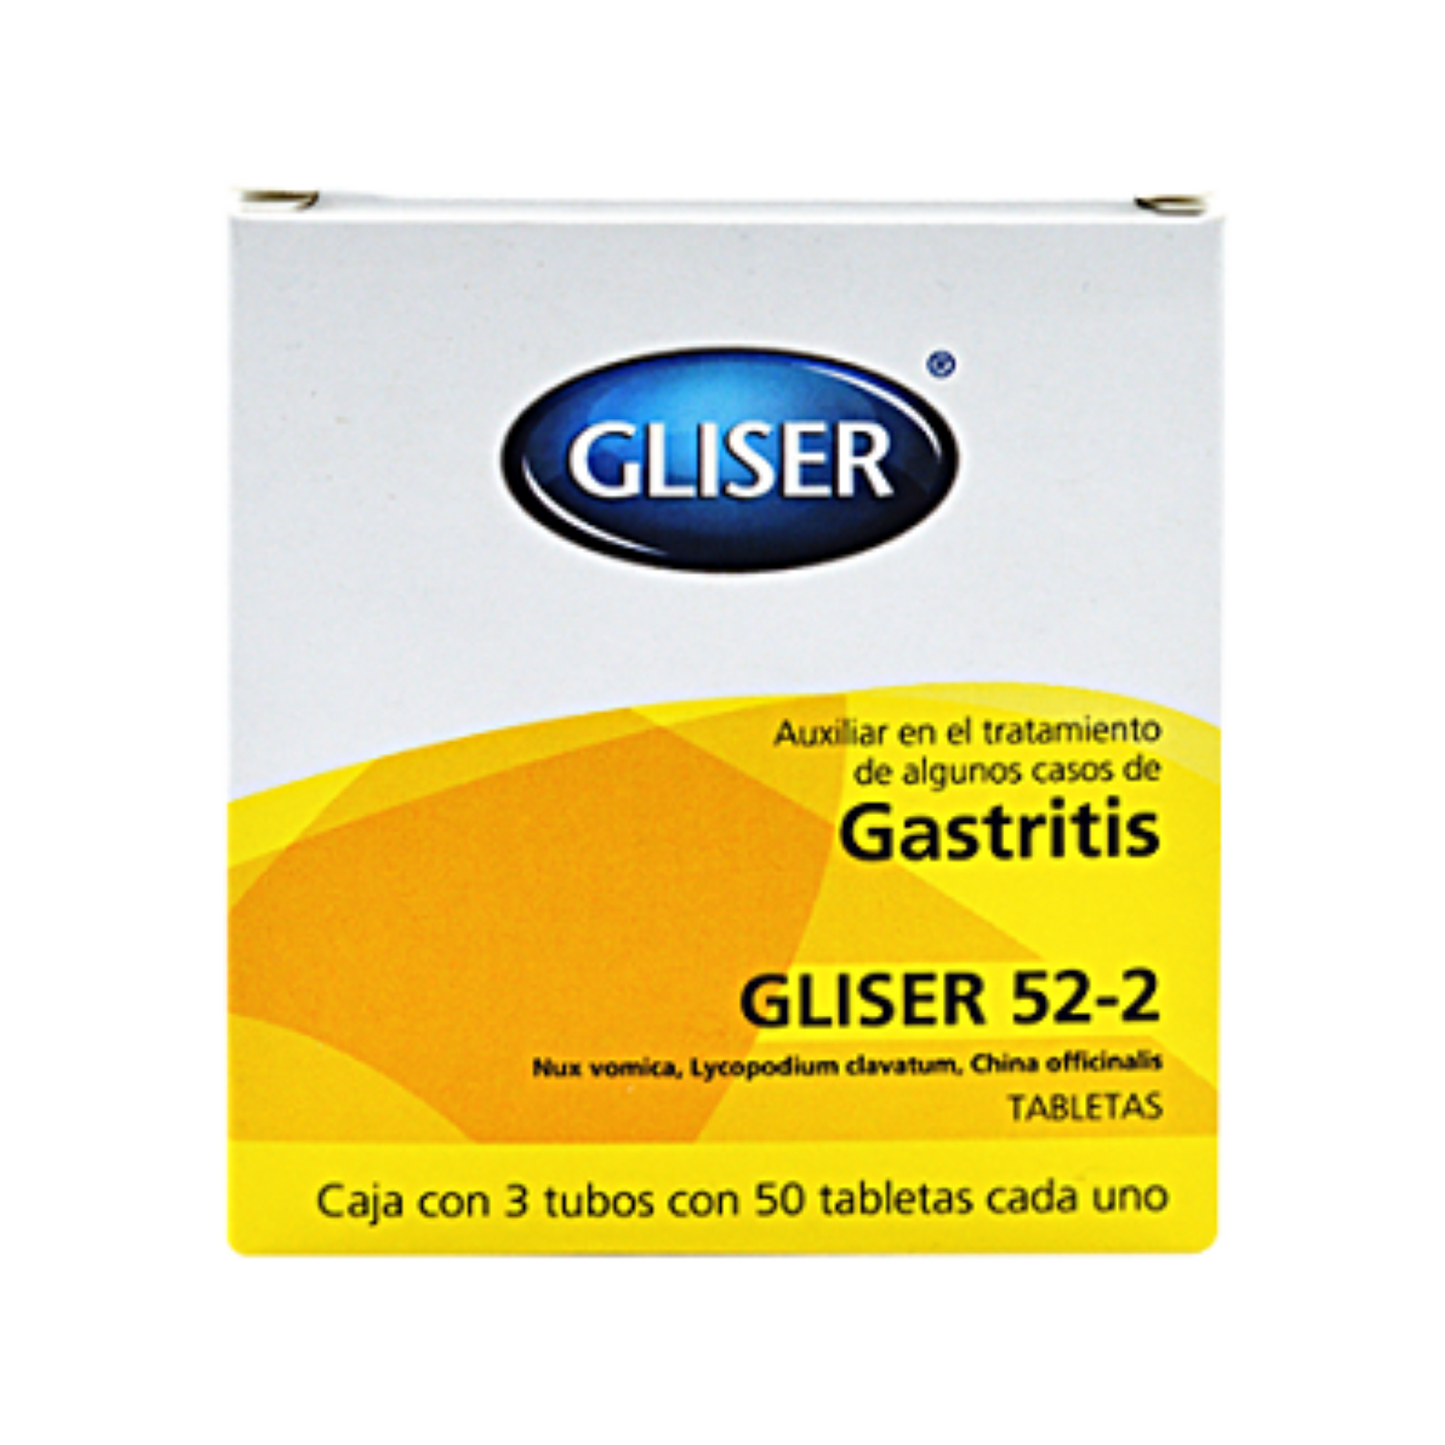 GASTRITIS GLISER 52-2